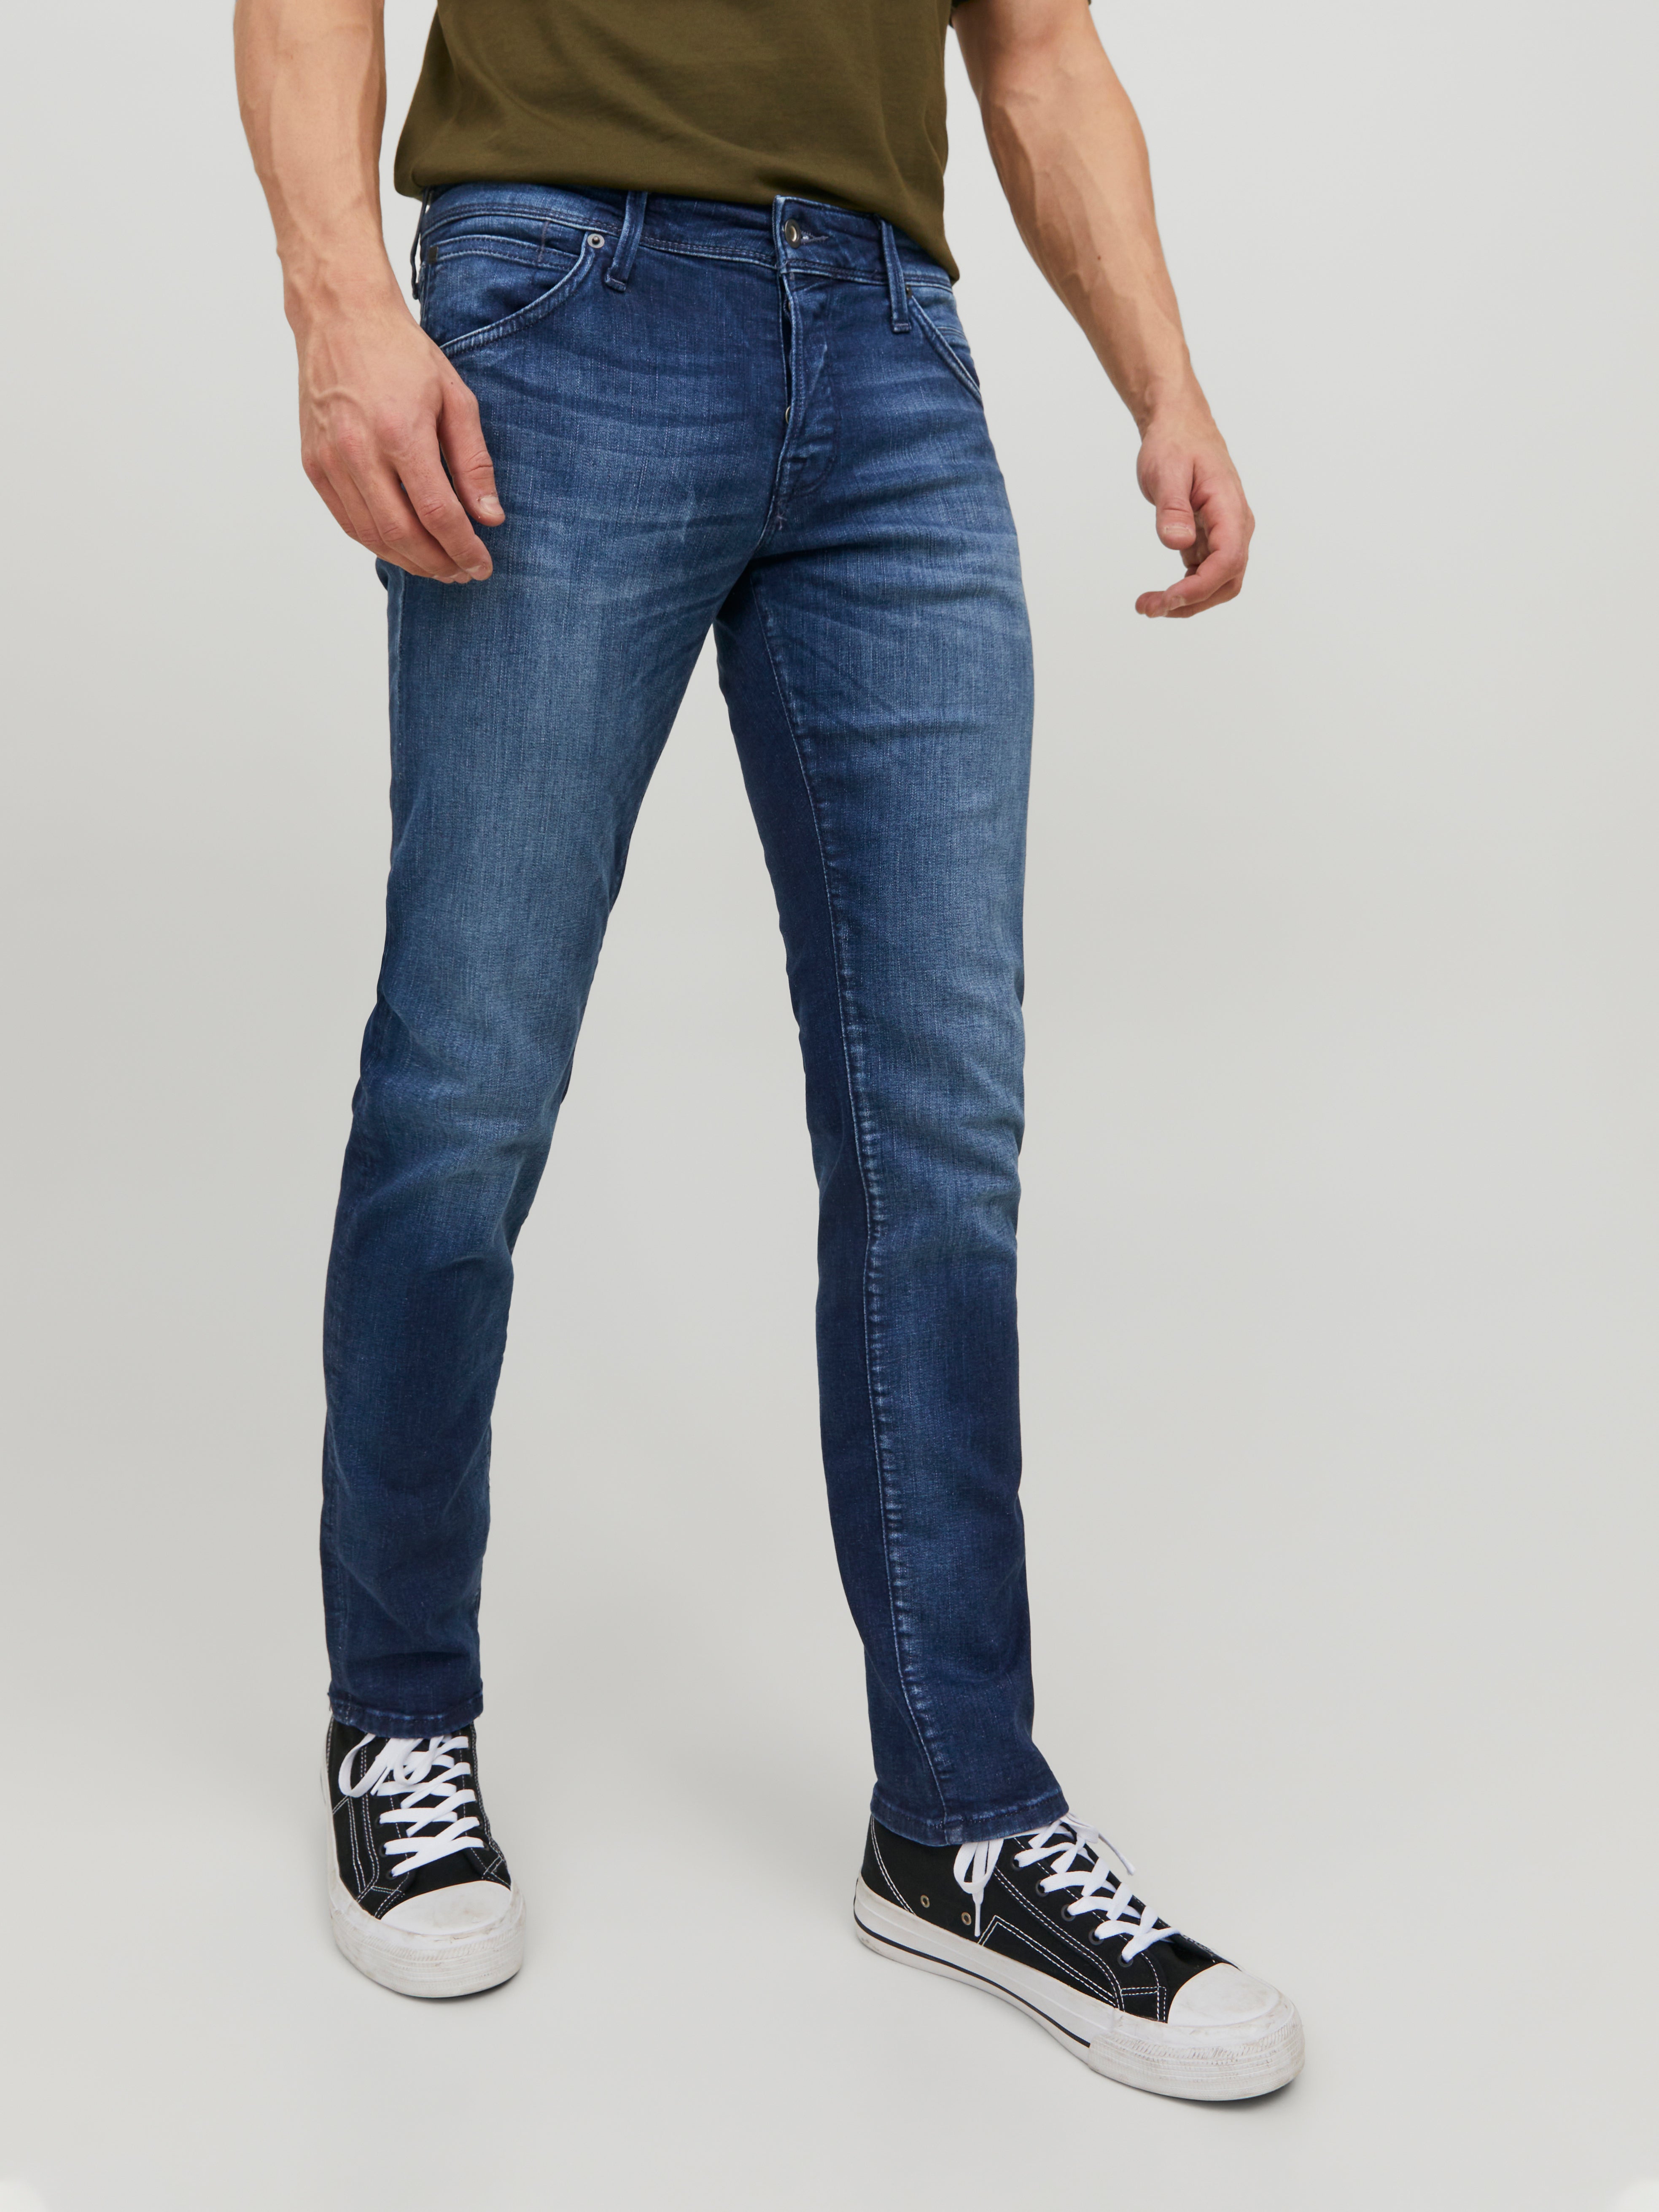 NOOS JOS Jack 50SPS Medium 247 jeans & | Slim | fit JJFOX Blue JJIGLENN Jones®